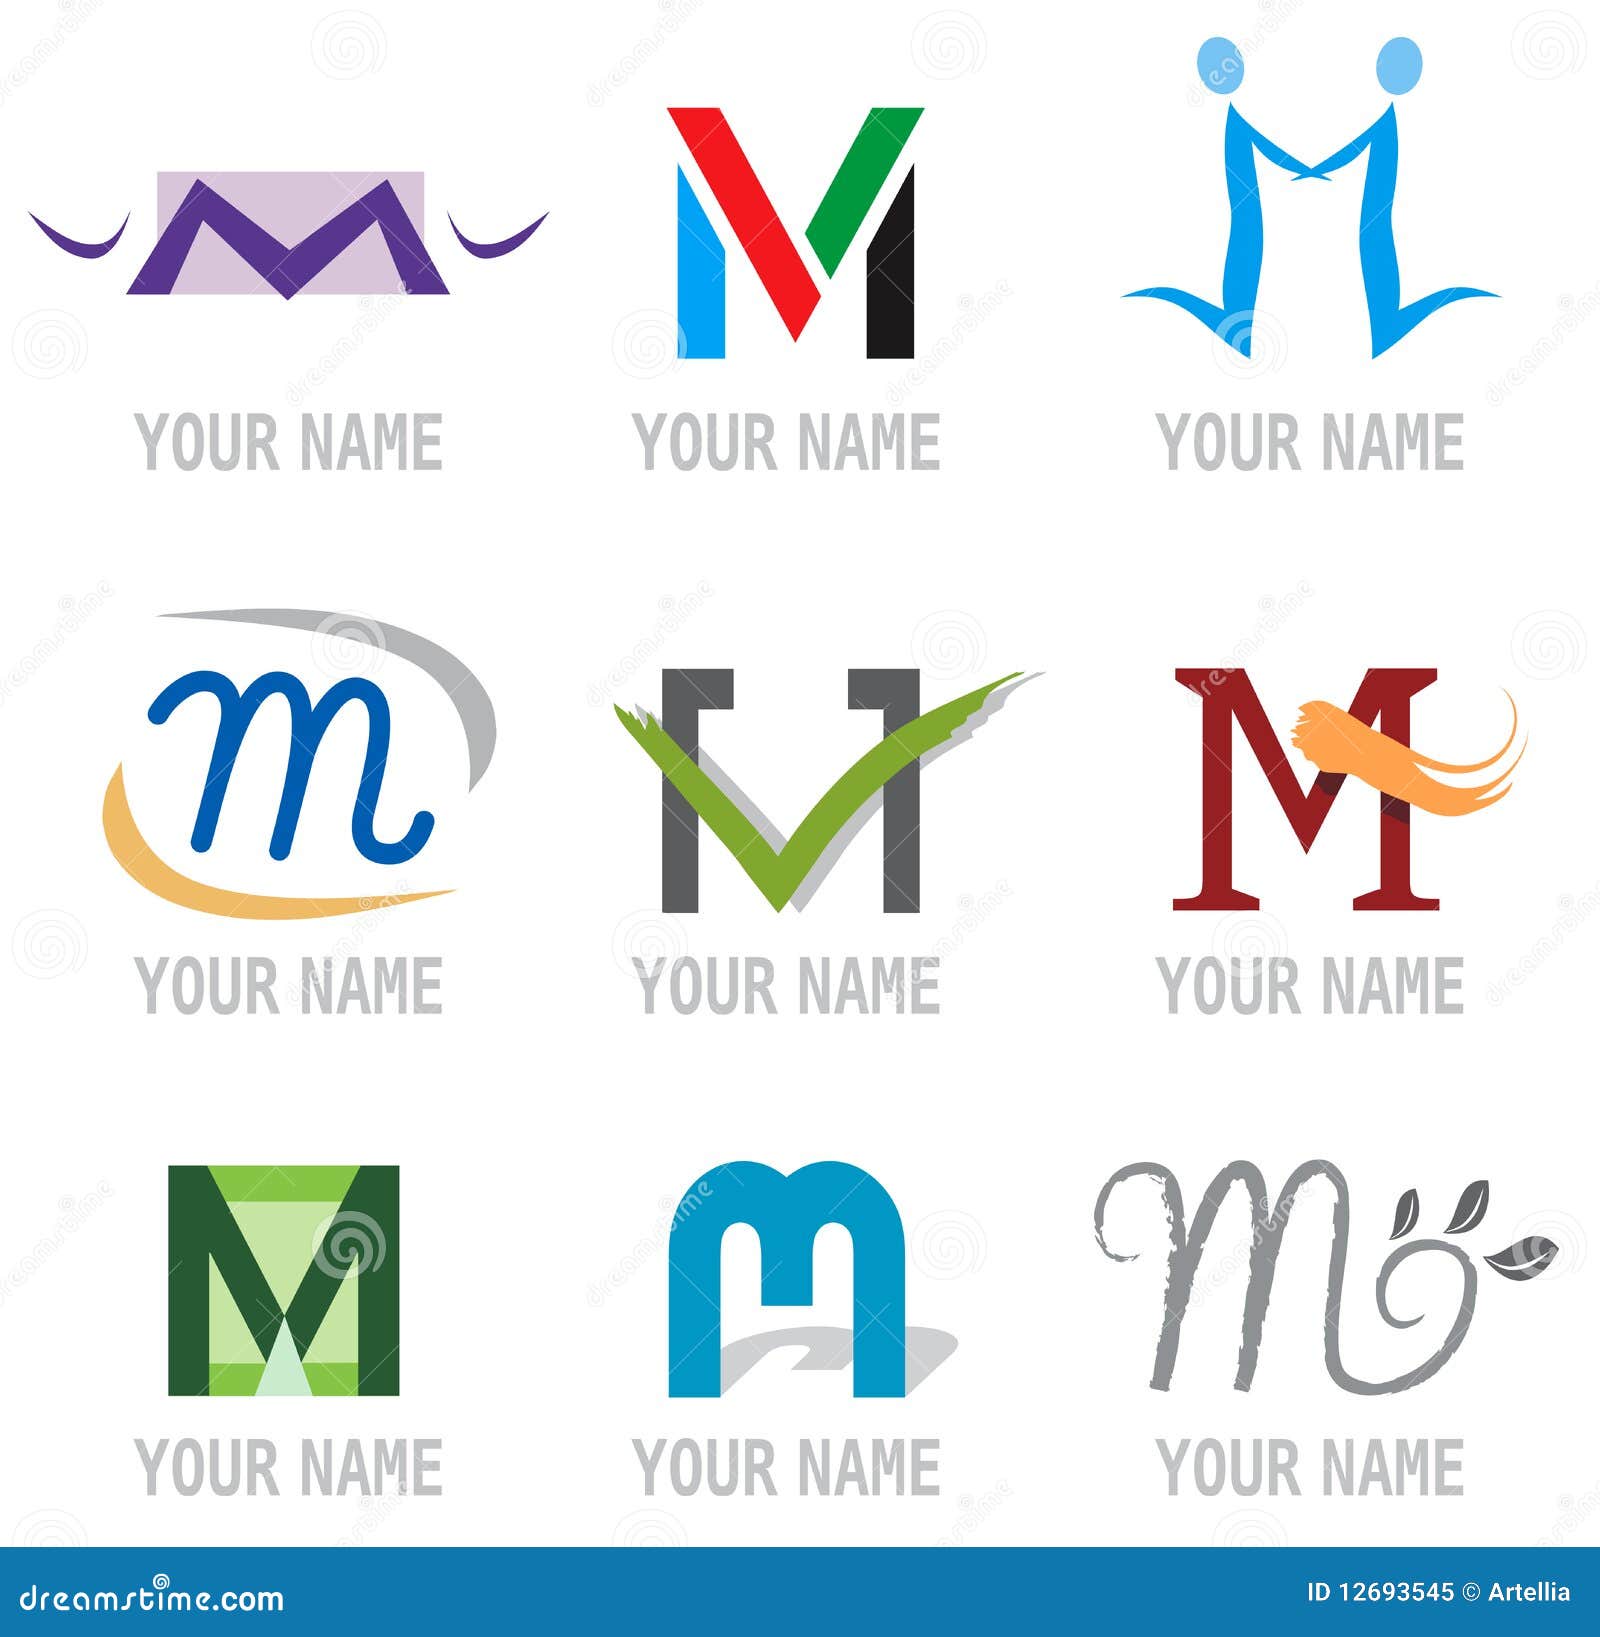 Mm logo Vectors & Illustrations for Free Download